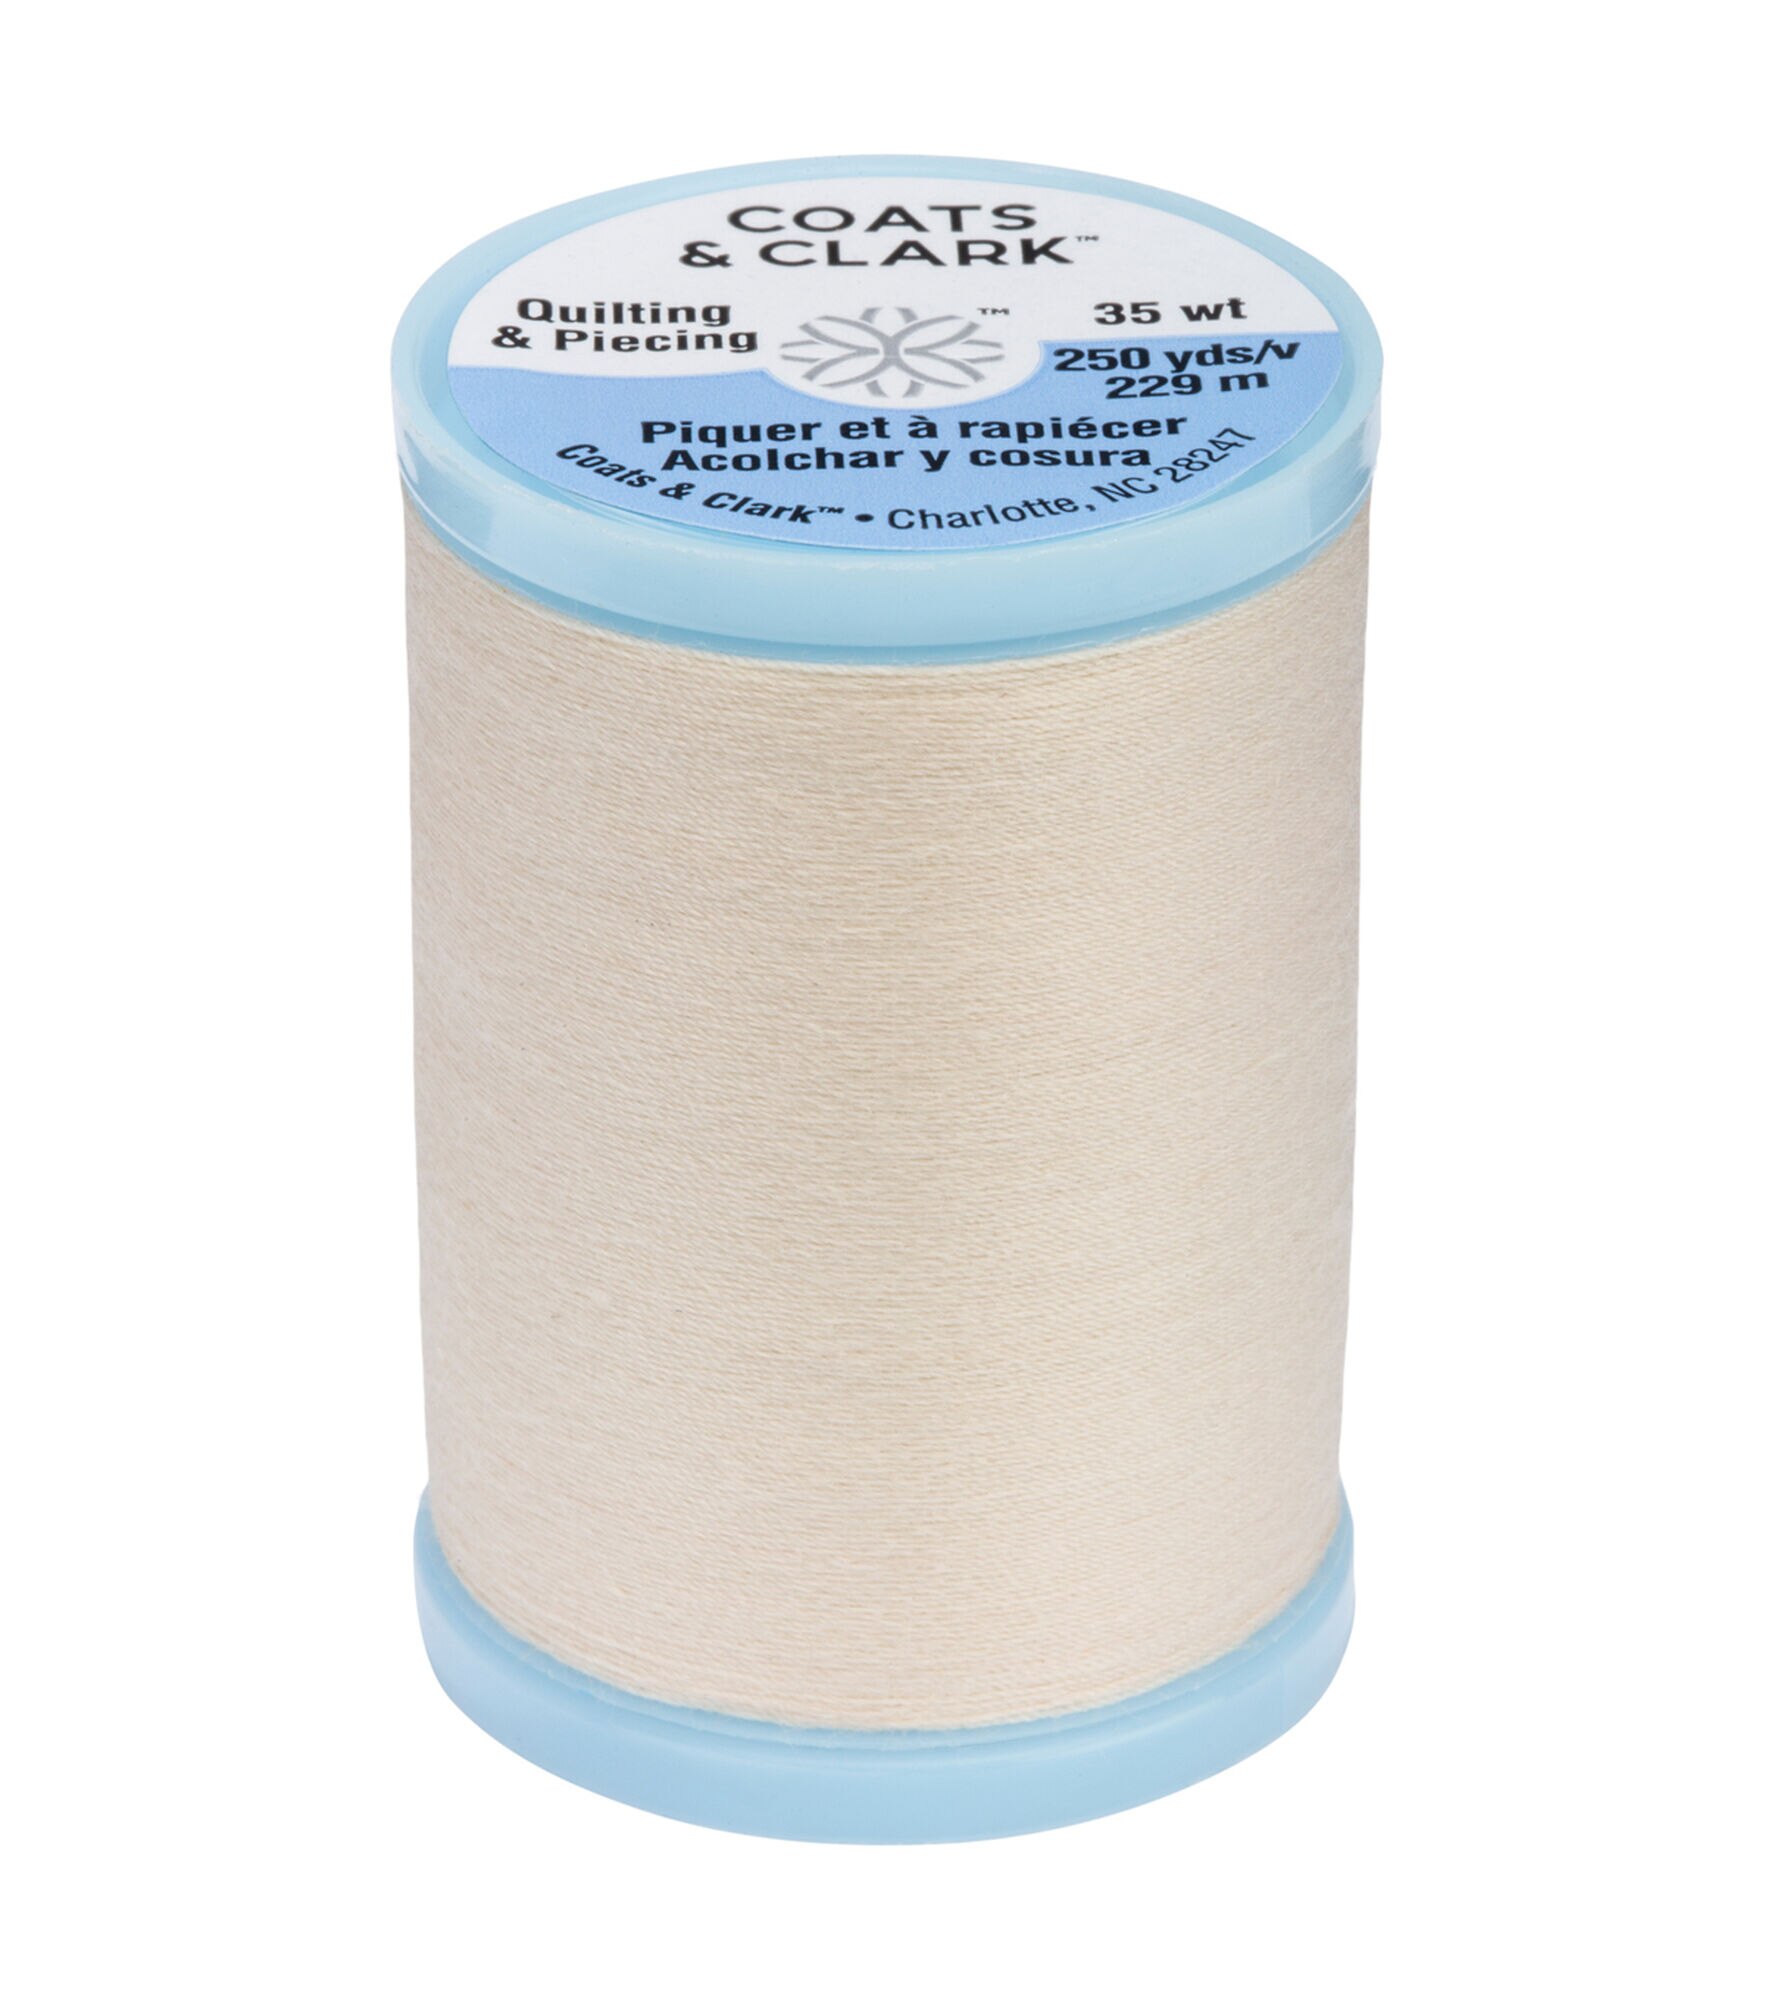 Coats & Clark 250yd 35wt Covered Quilting & Piecing Cotton Thread, 8010 Natural, hi-res